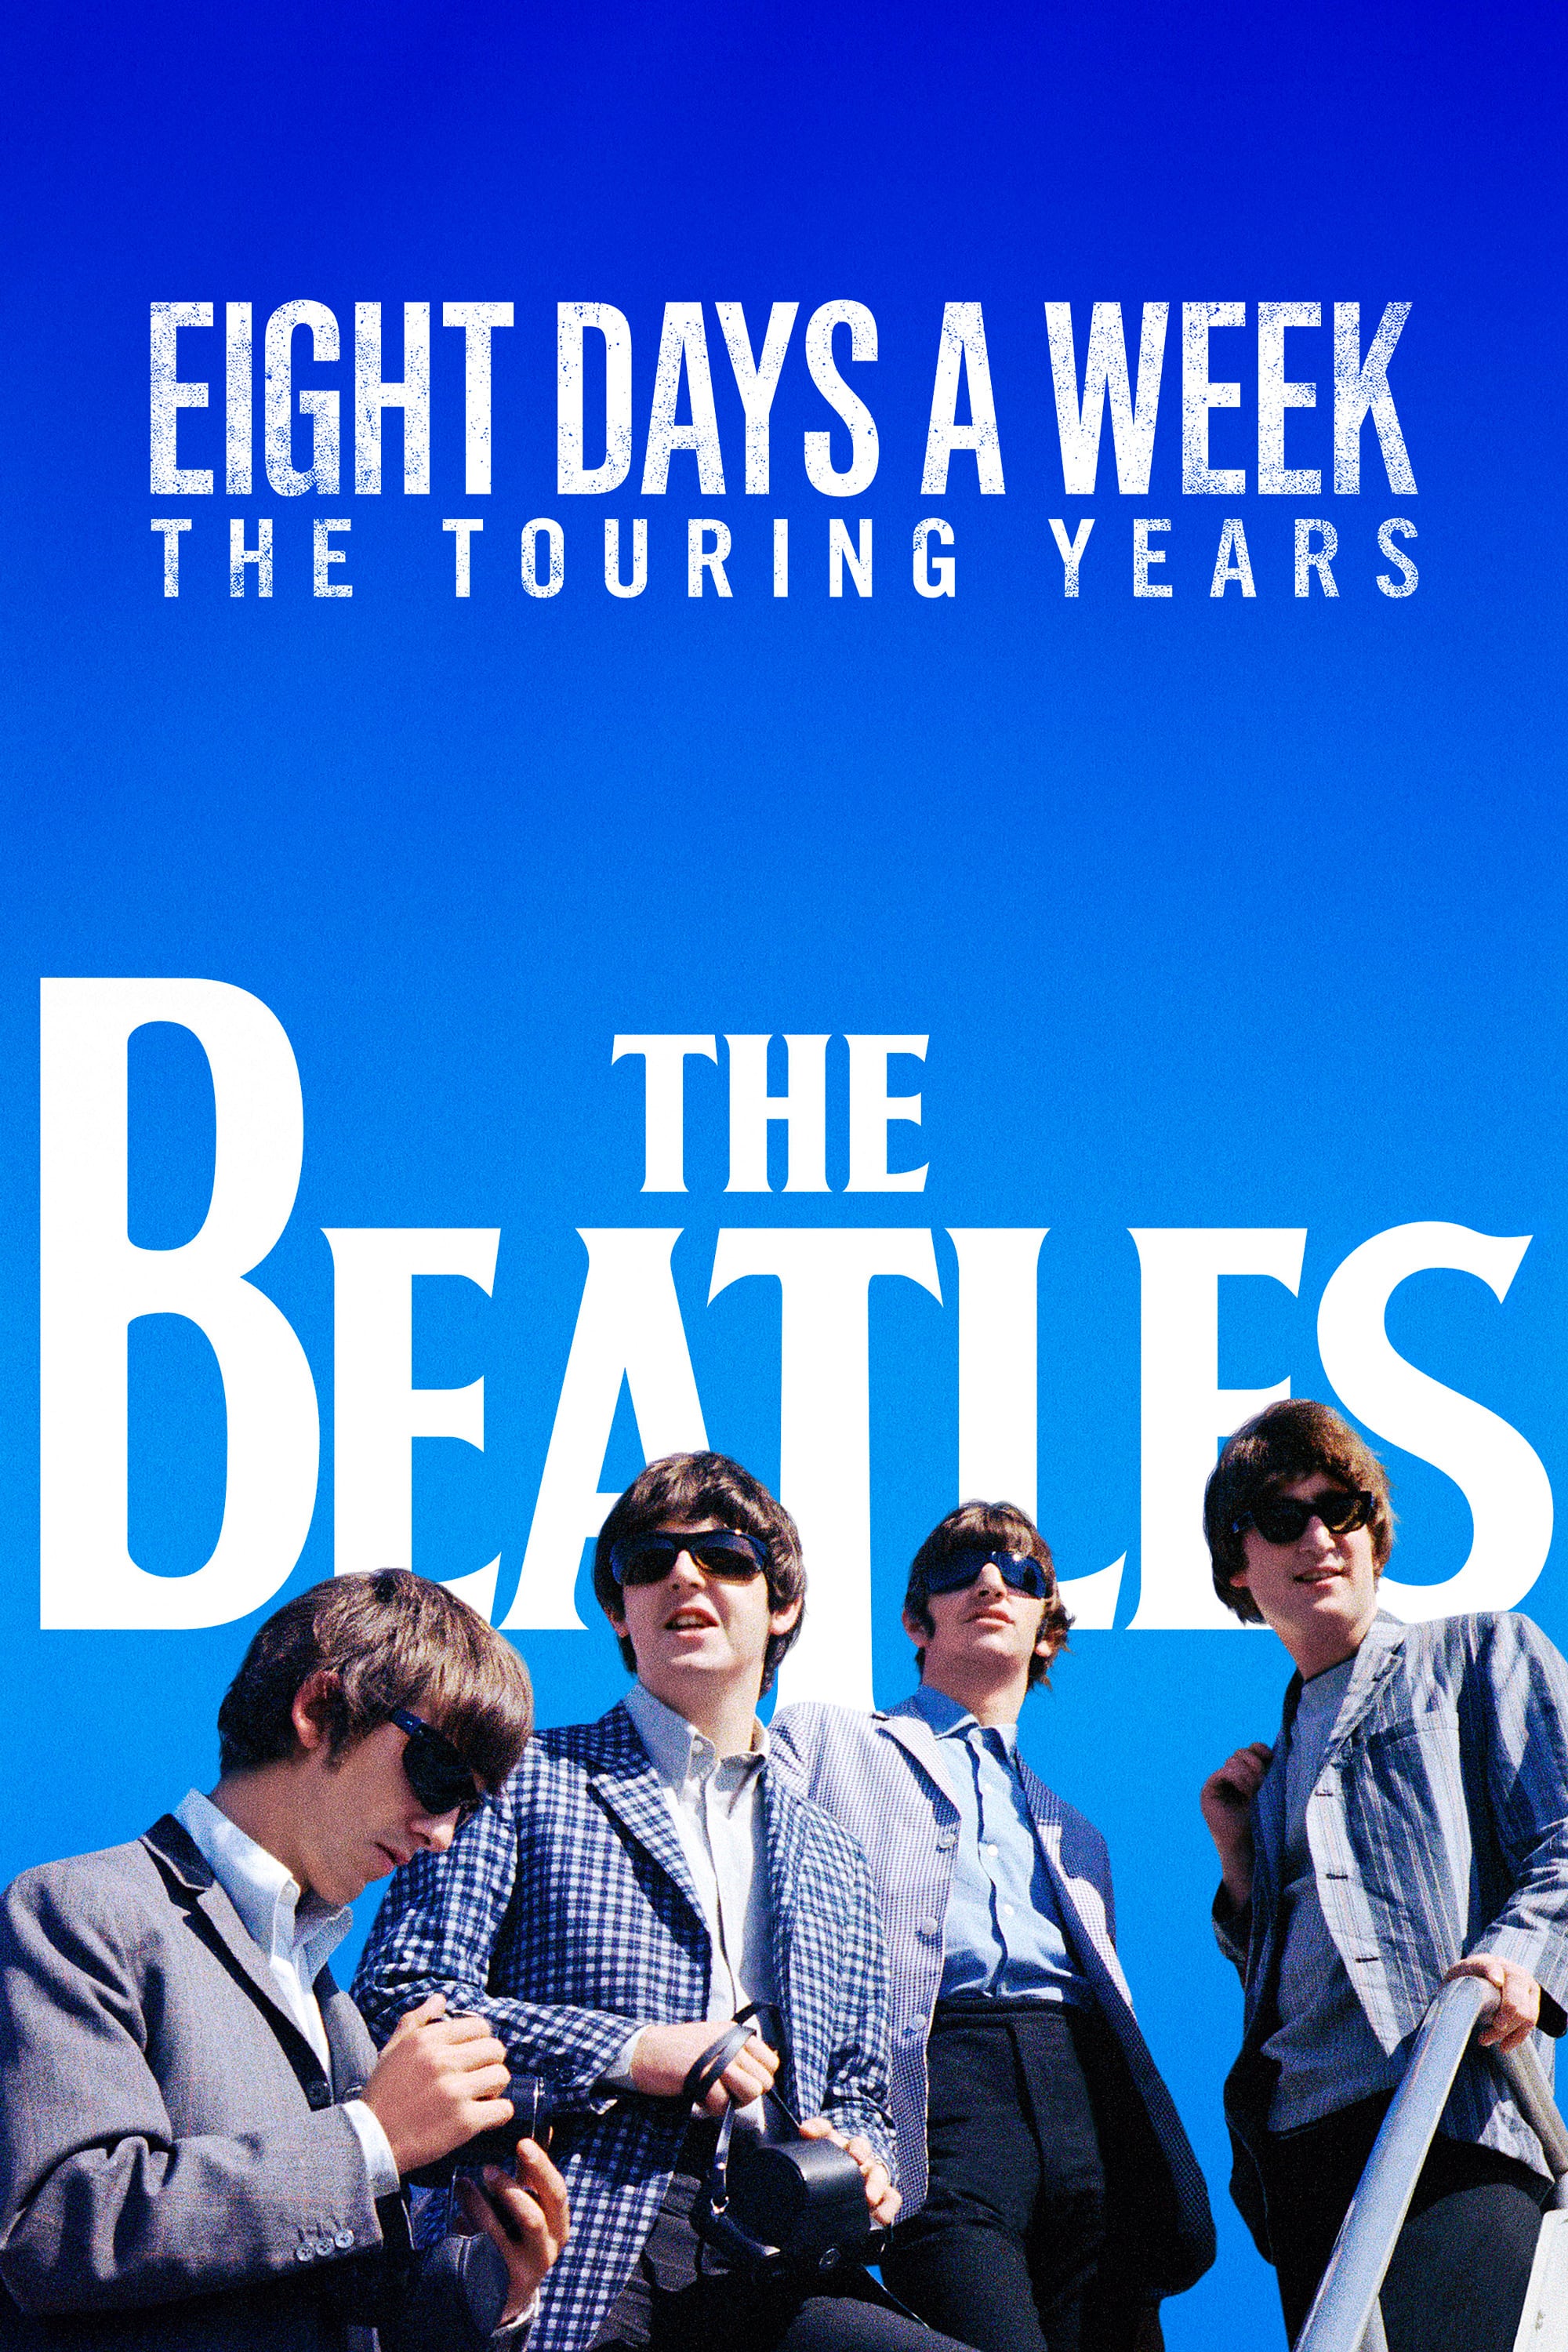 The Beatles: Vuit dies per setmana